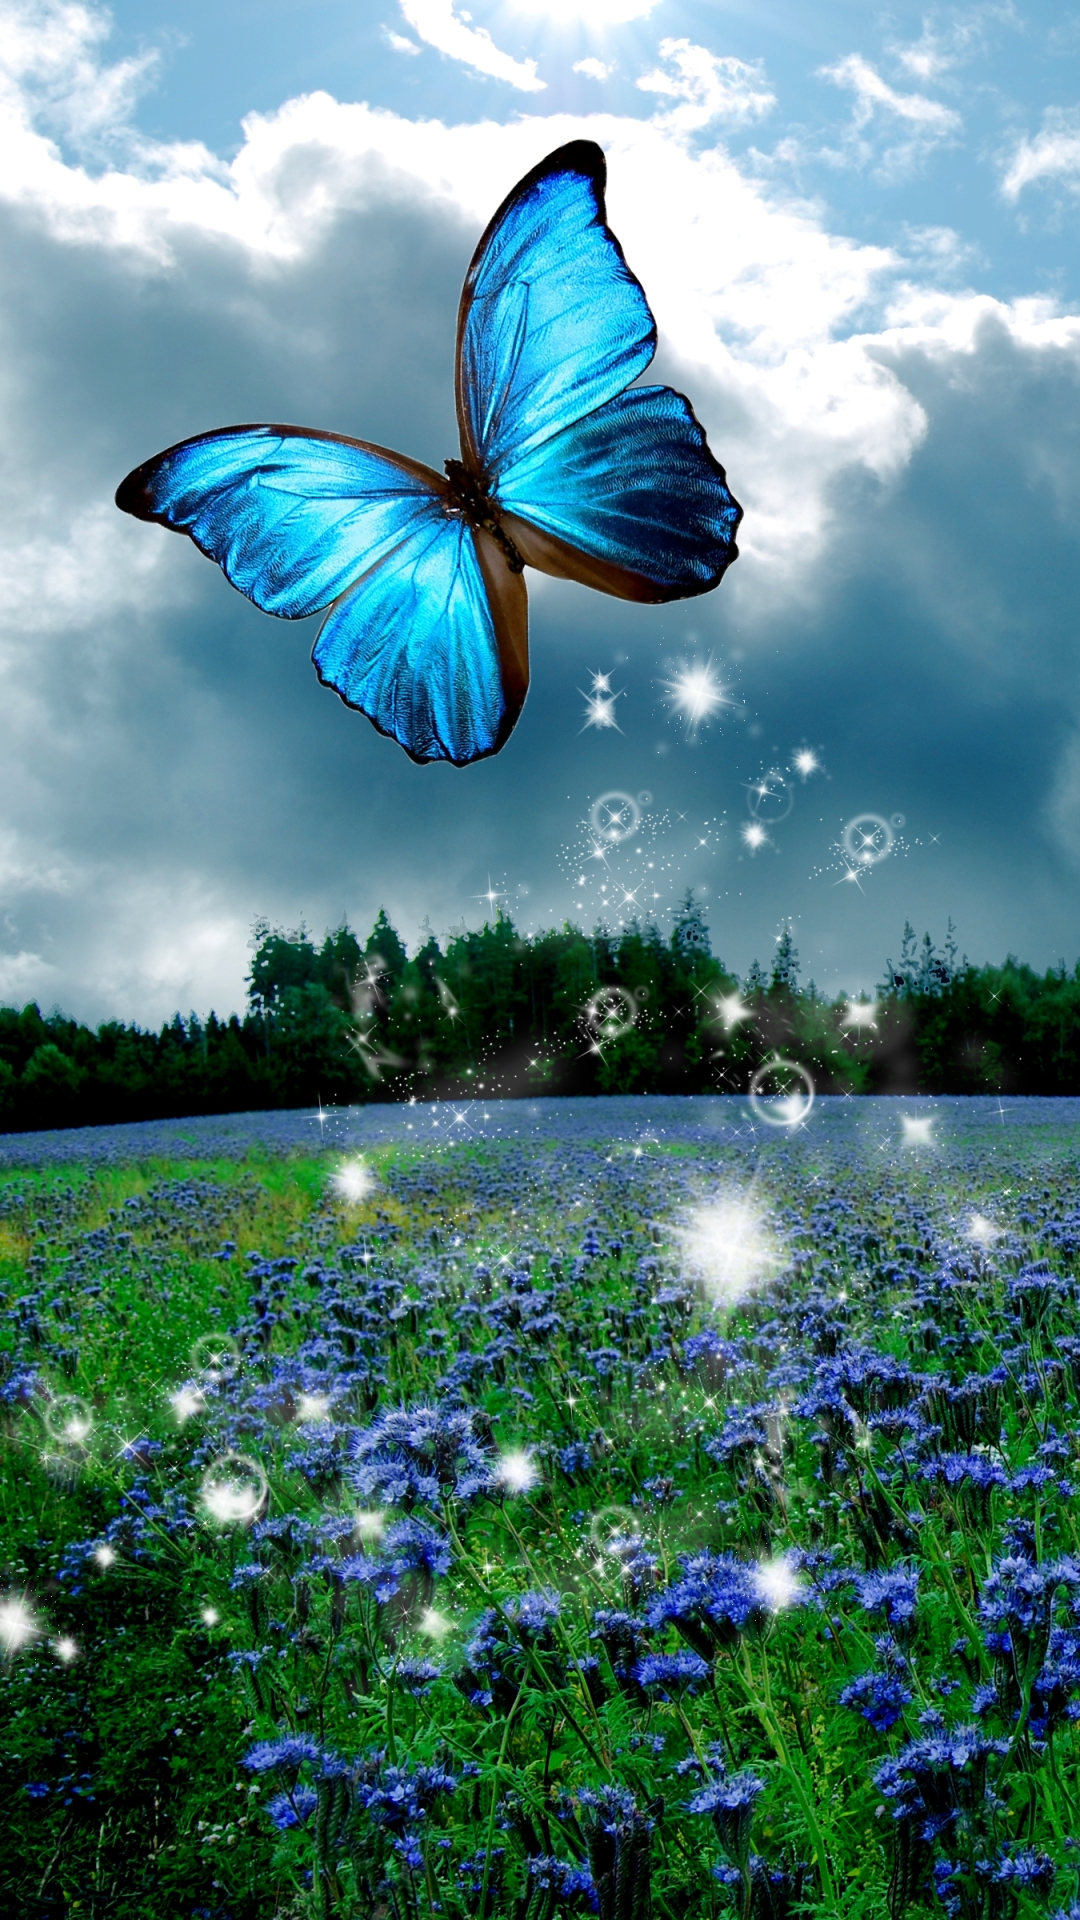 fond d'écran mobile fond d'écran mobile,papillon,bleu,la nature,paysage naturel,insecte